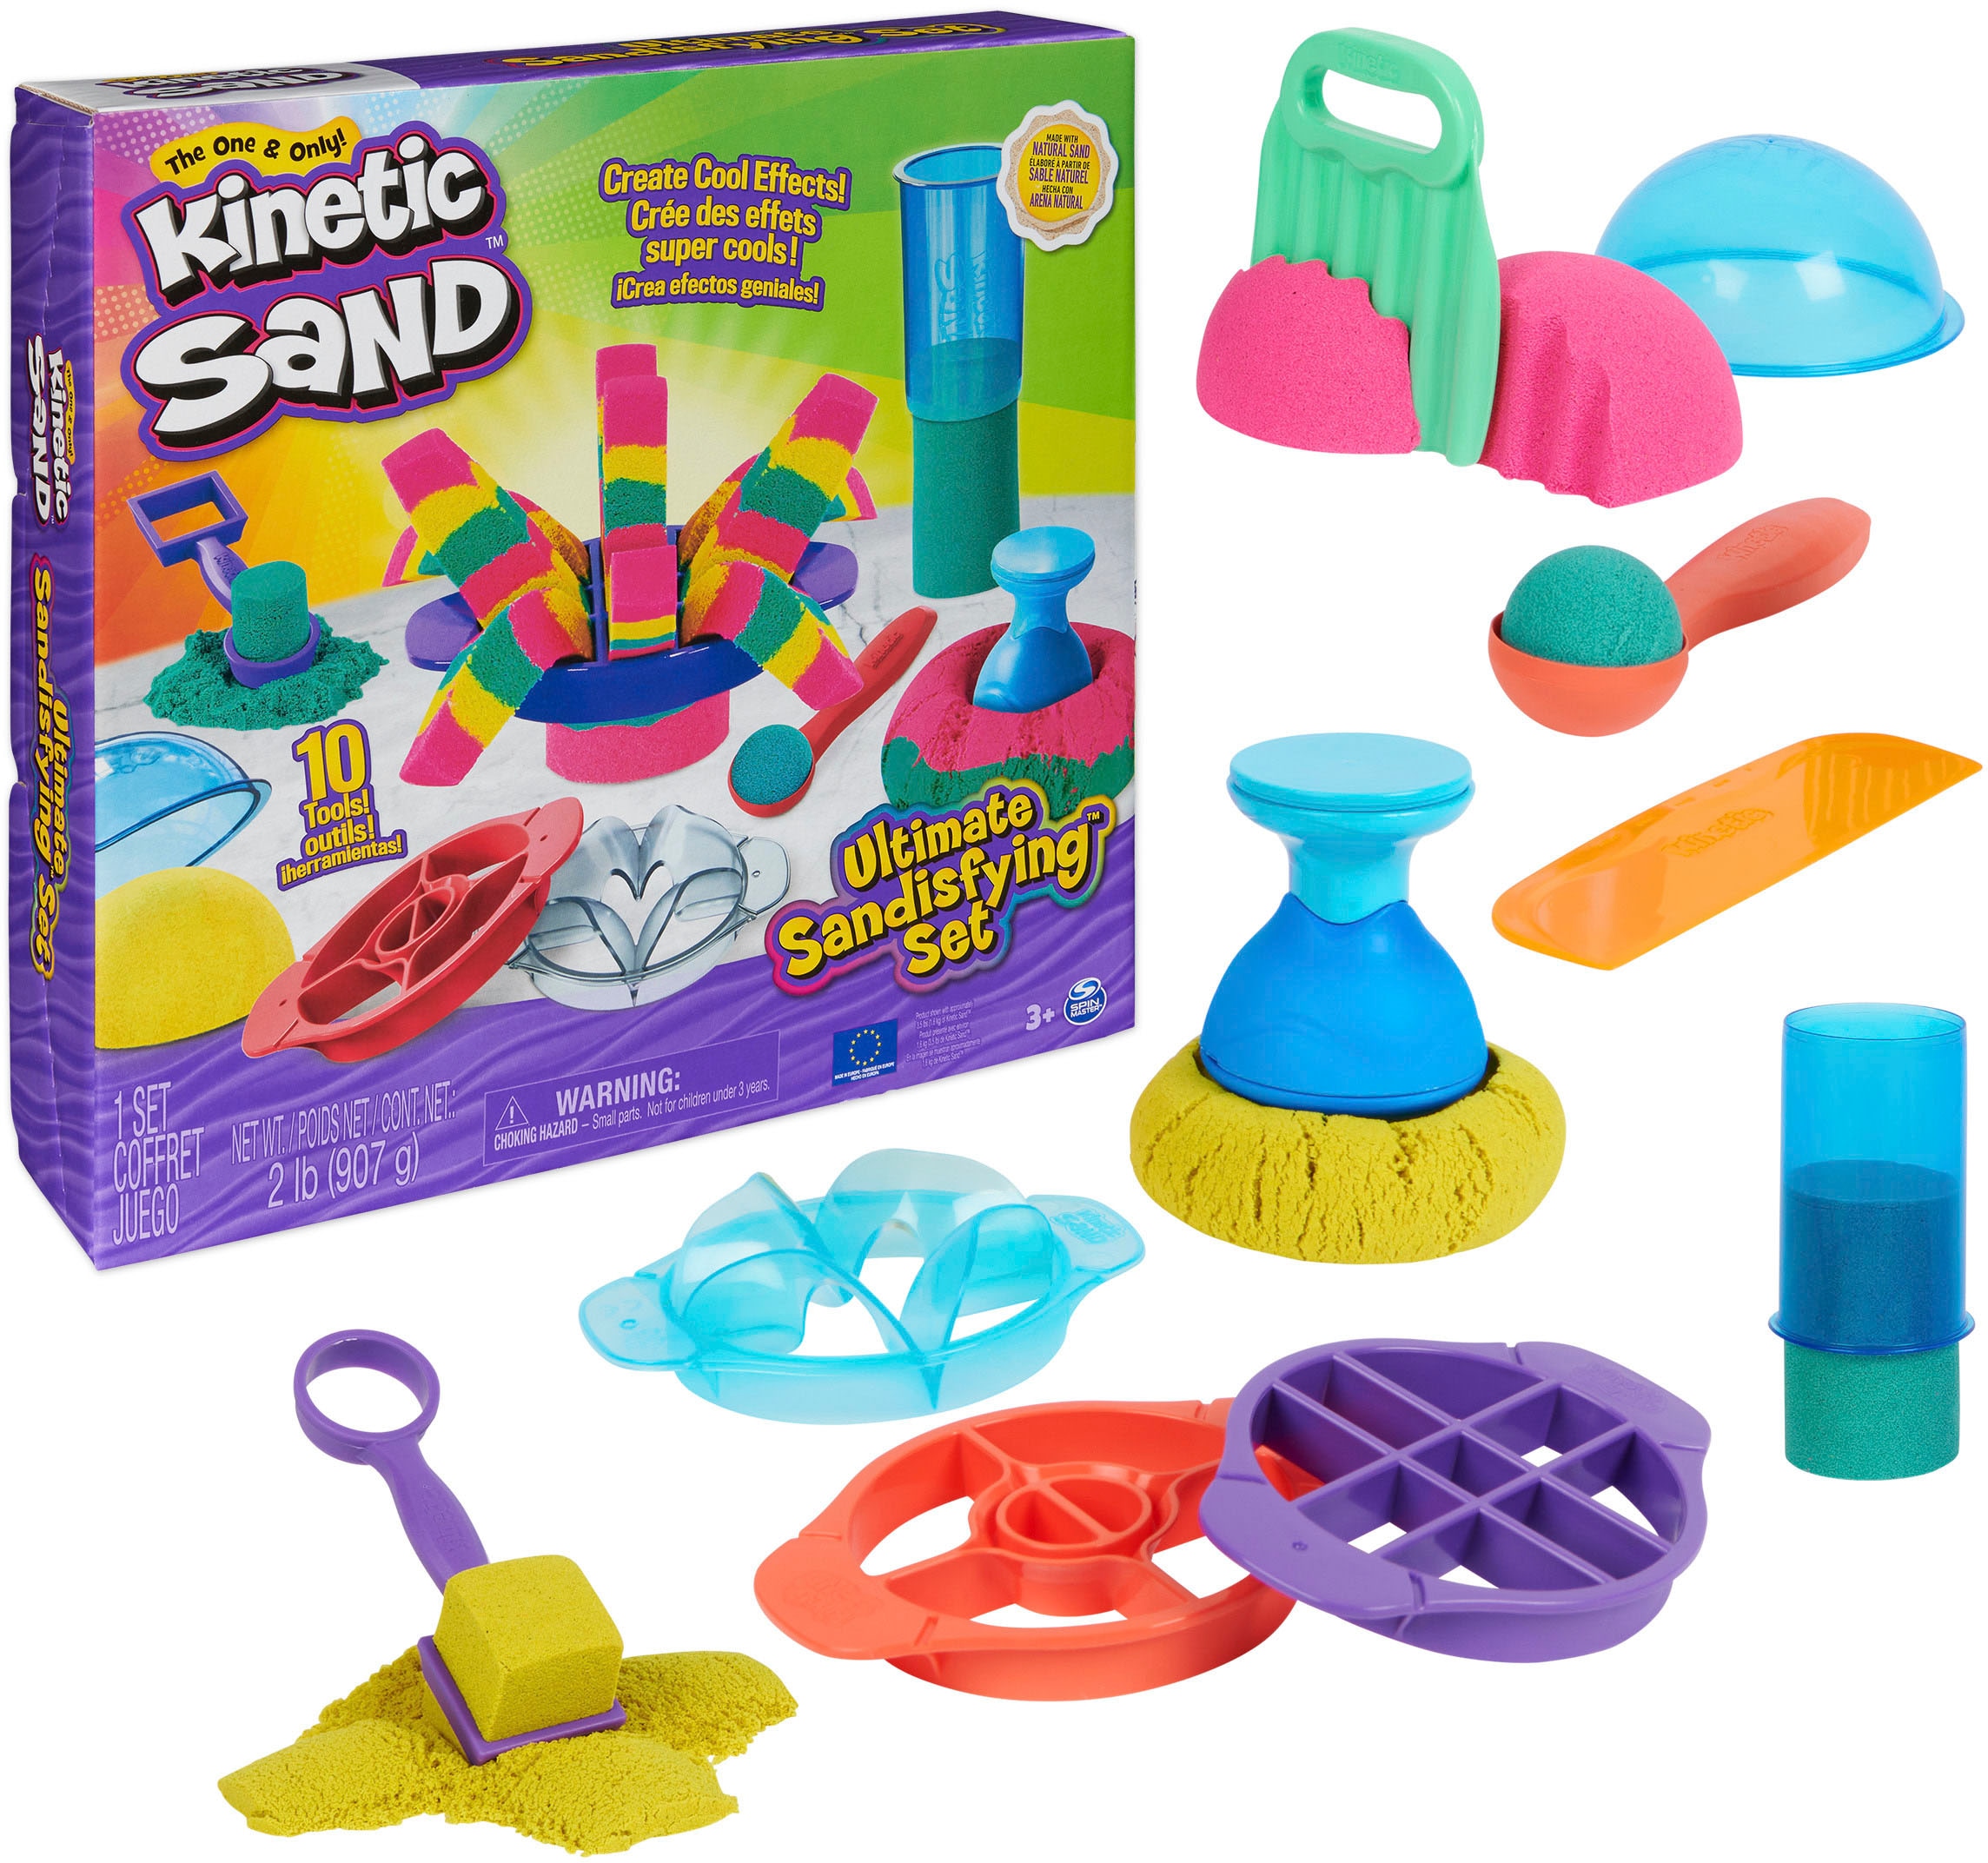 Kreativset »Kinetic Sand - Ultimate Sandisfying Set 907g«